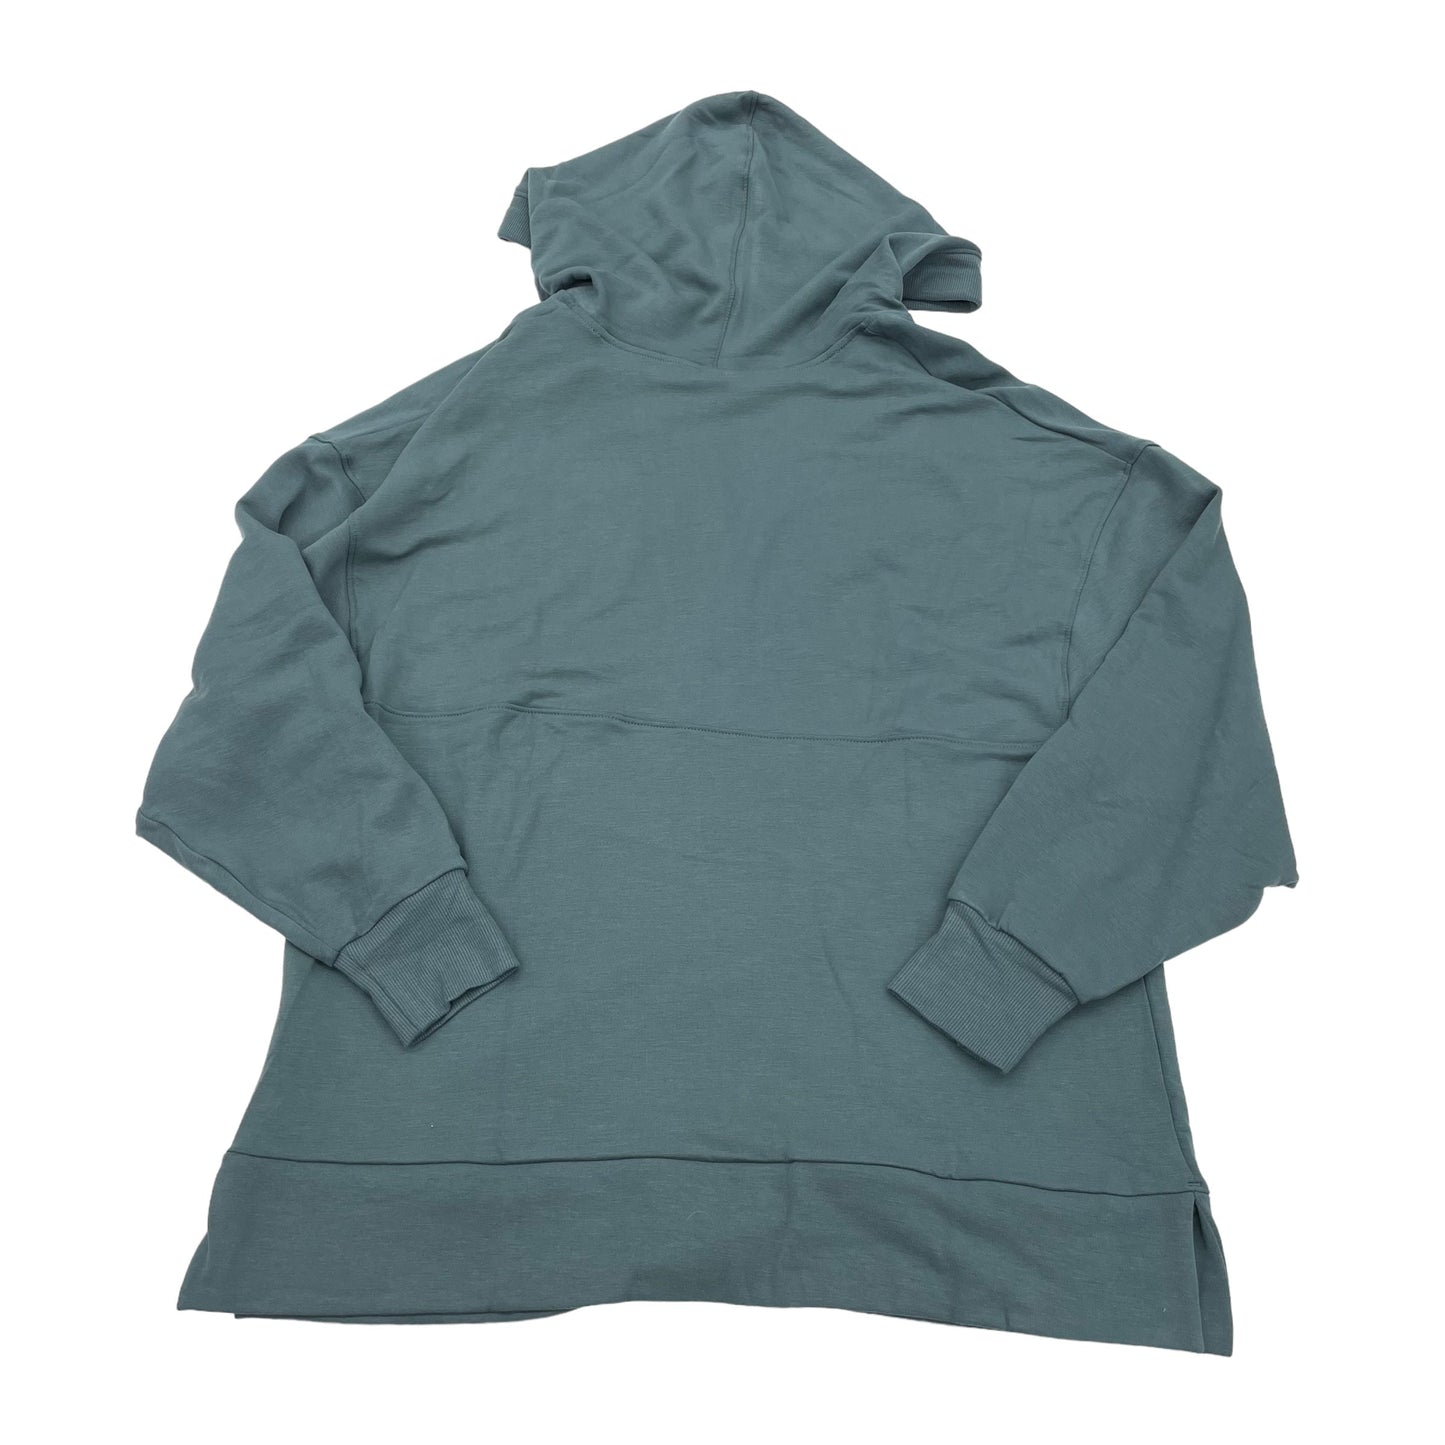 Athletic Sweatshirt Hoodie By Old Navy  Size: S